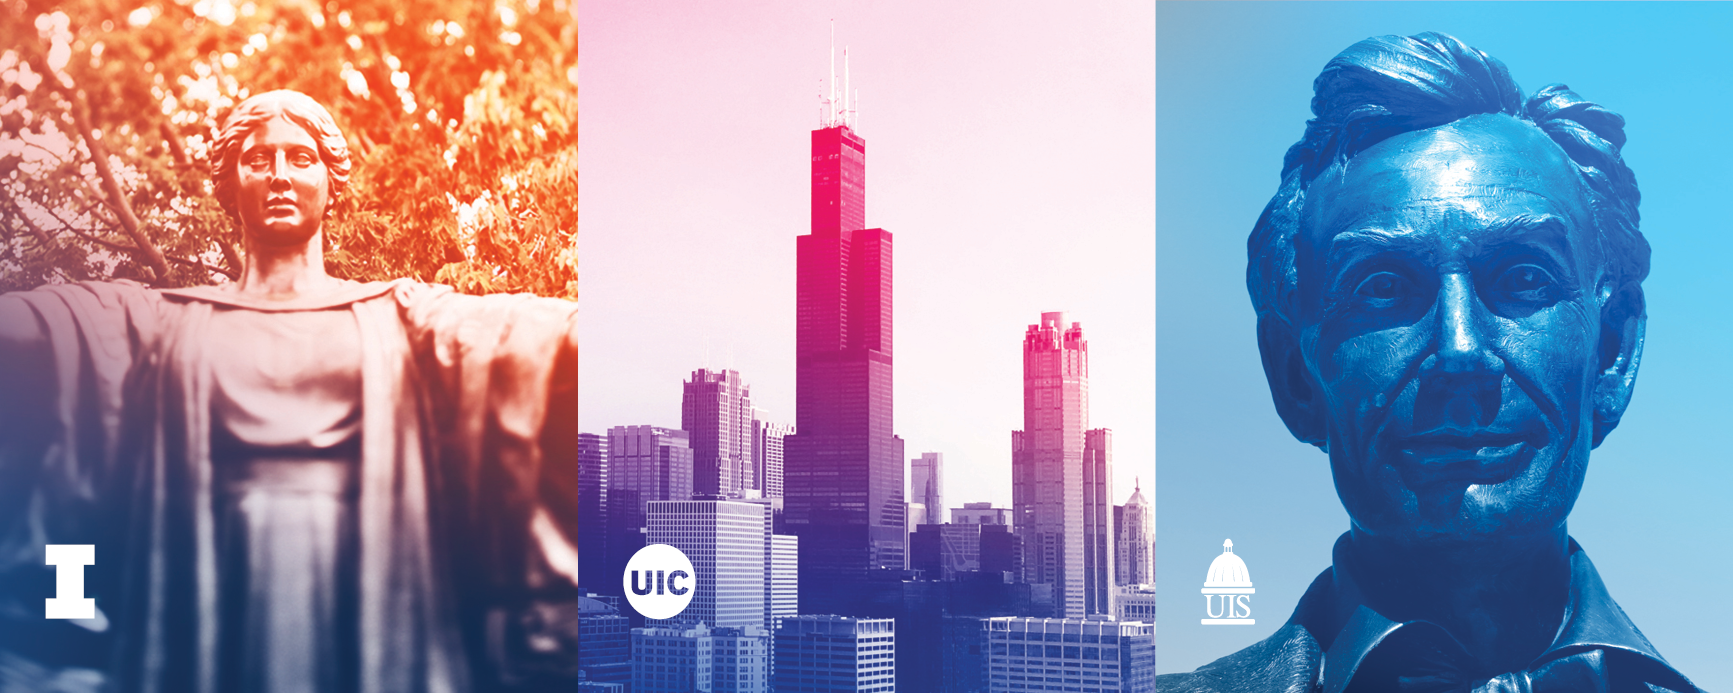 Alma Mater, Chicago Skyline, Lincoln bust - university logos